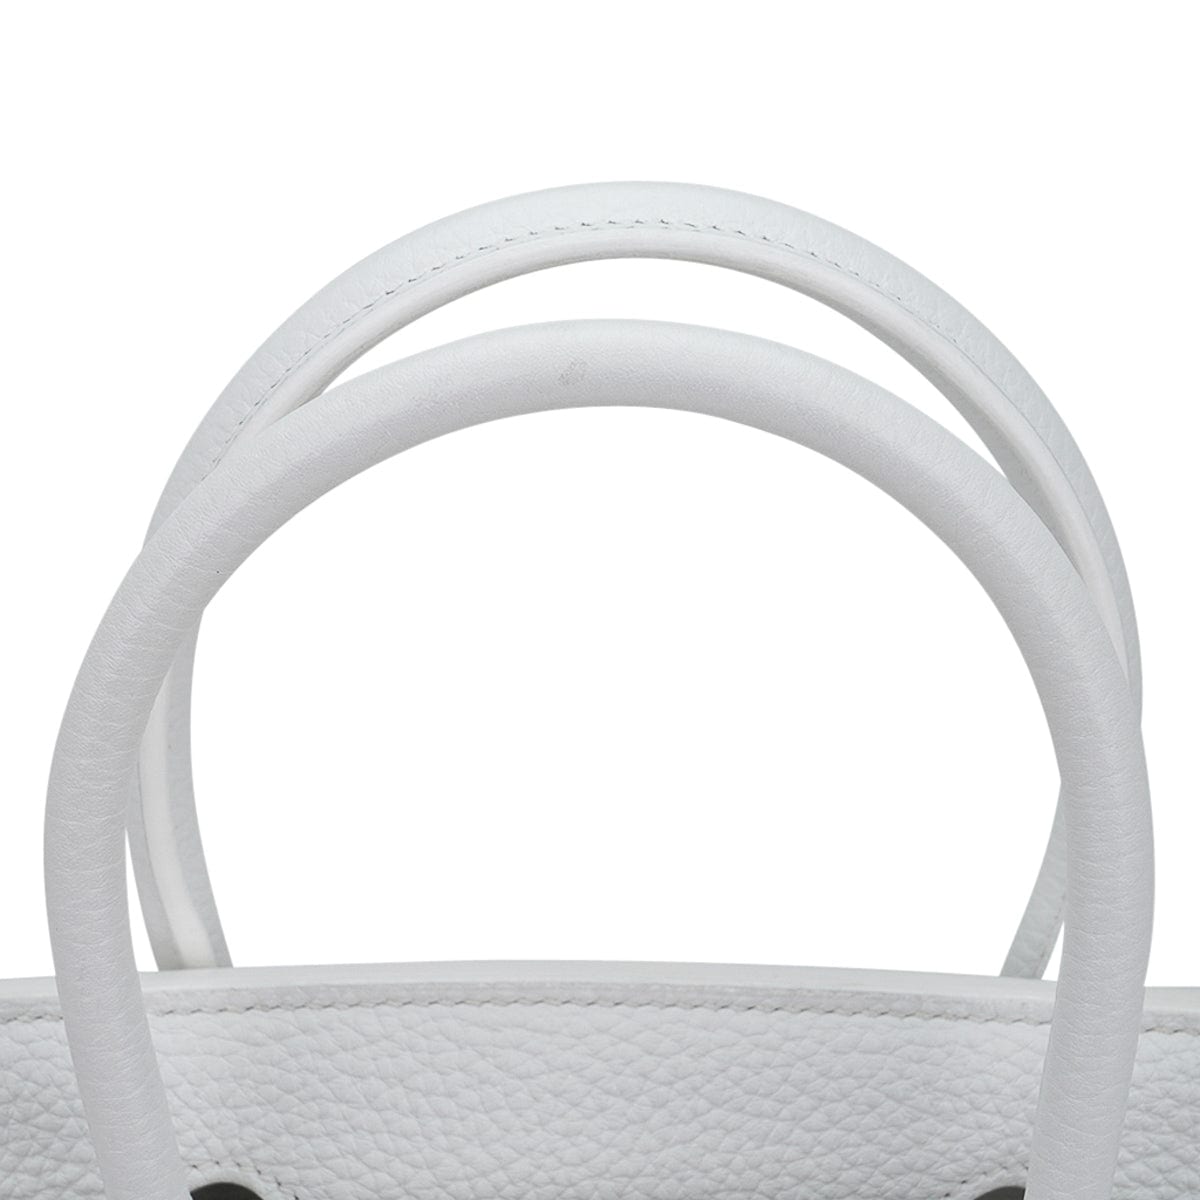 HERMÈS Birkin Bags & Handbags for Women, Authenticity Guaranteed